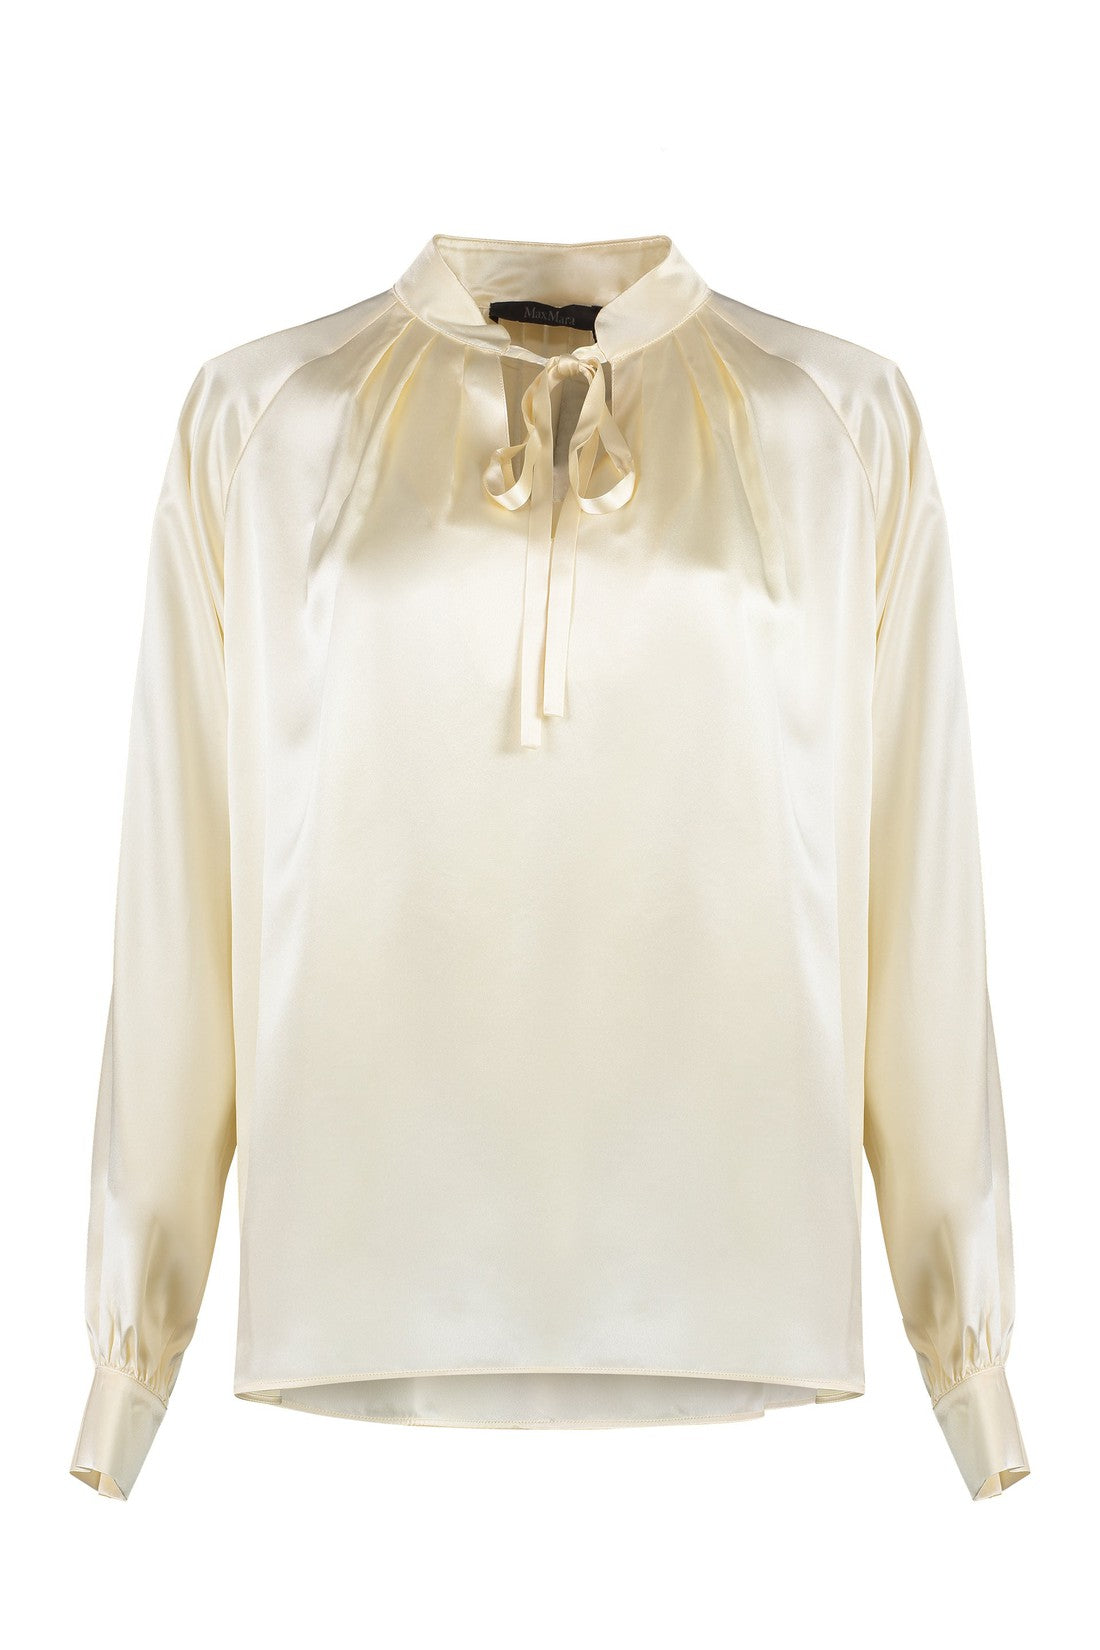 Max Mara-OUTLET-SALE-Tamigi silk blouse-ARCHIVIST